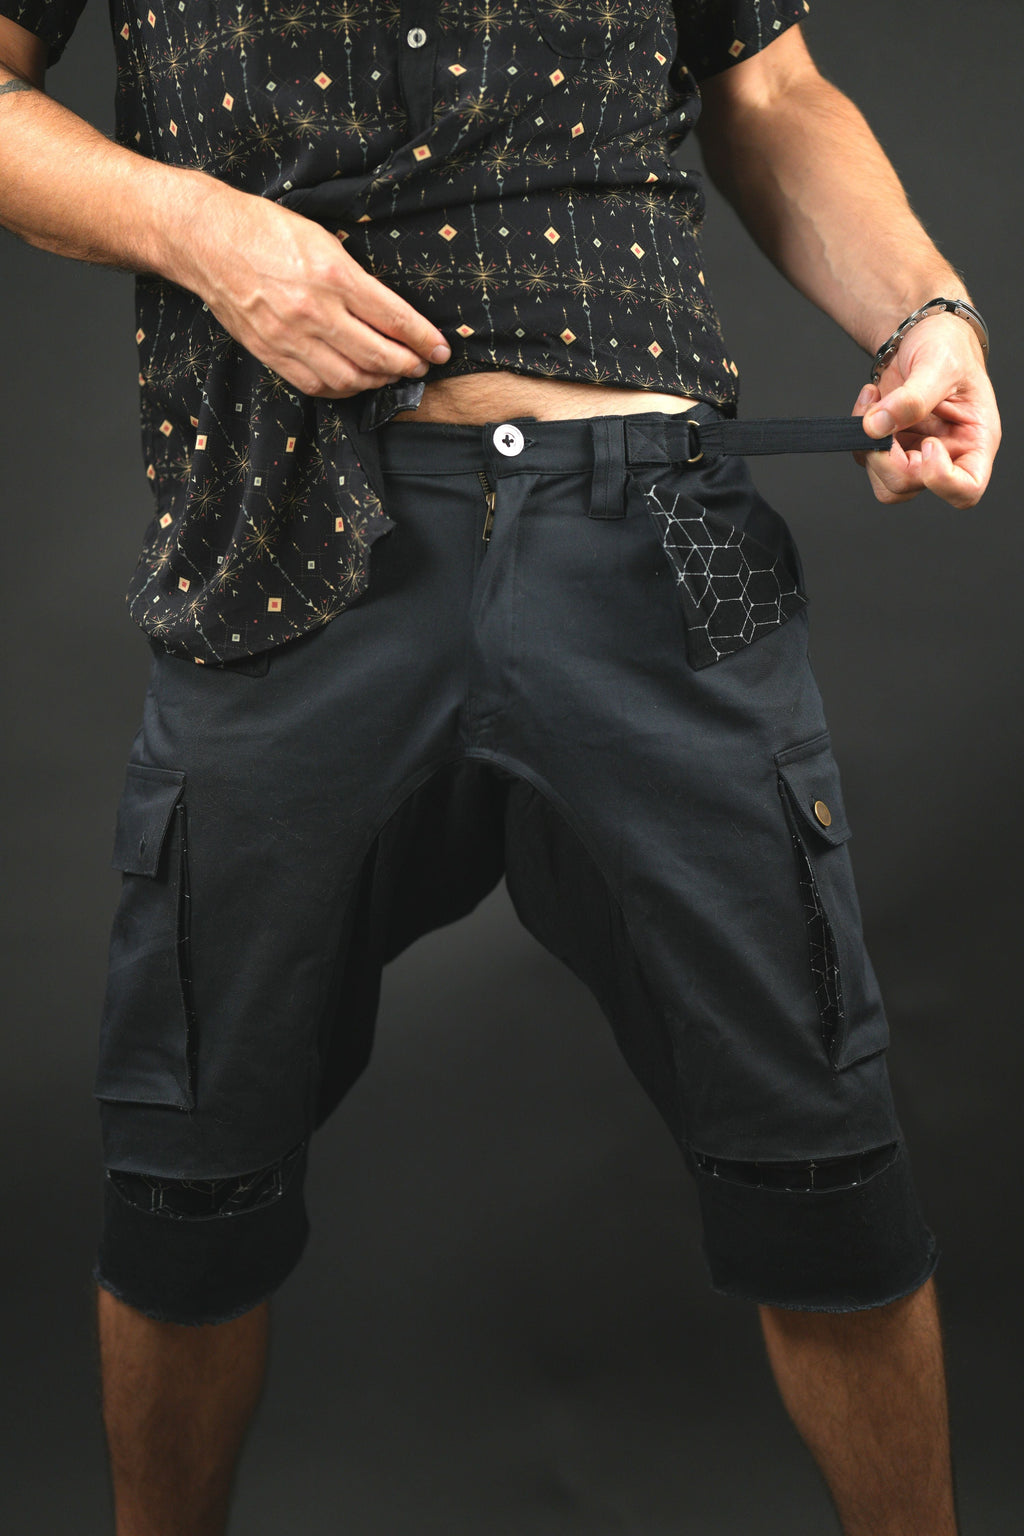 Drop Crotch Shorts for – Men Designs Sheron